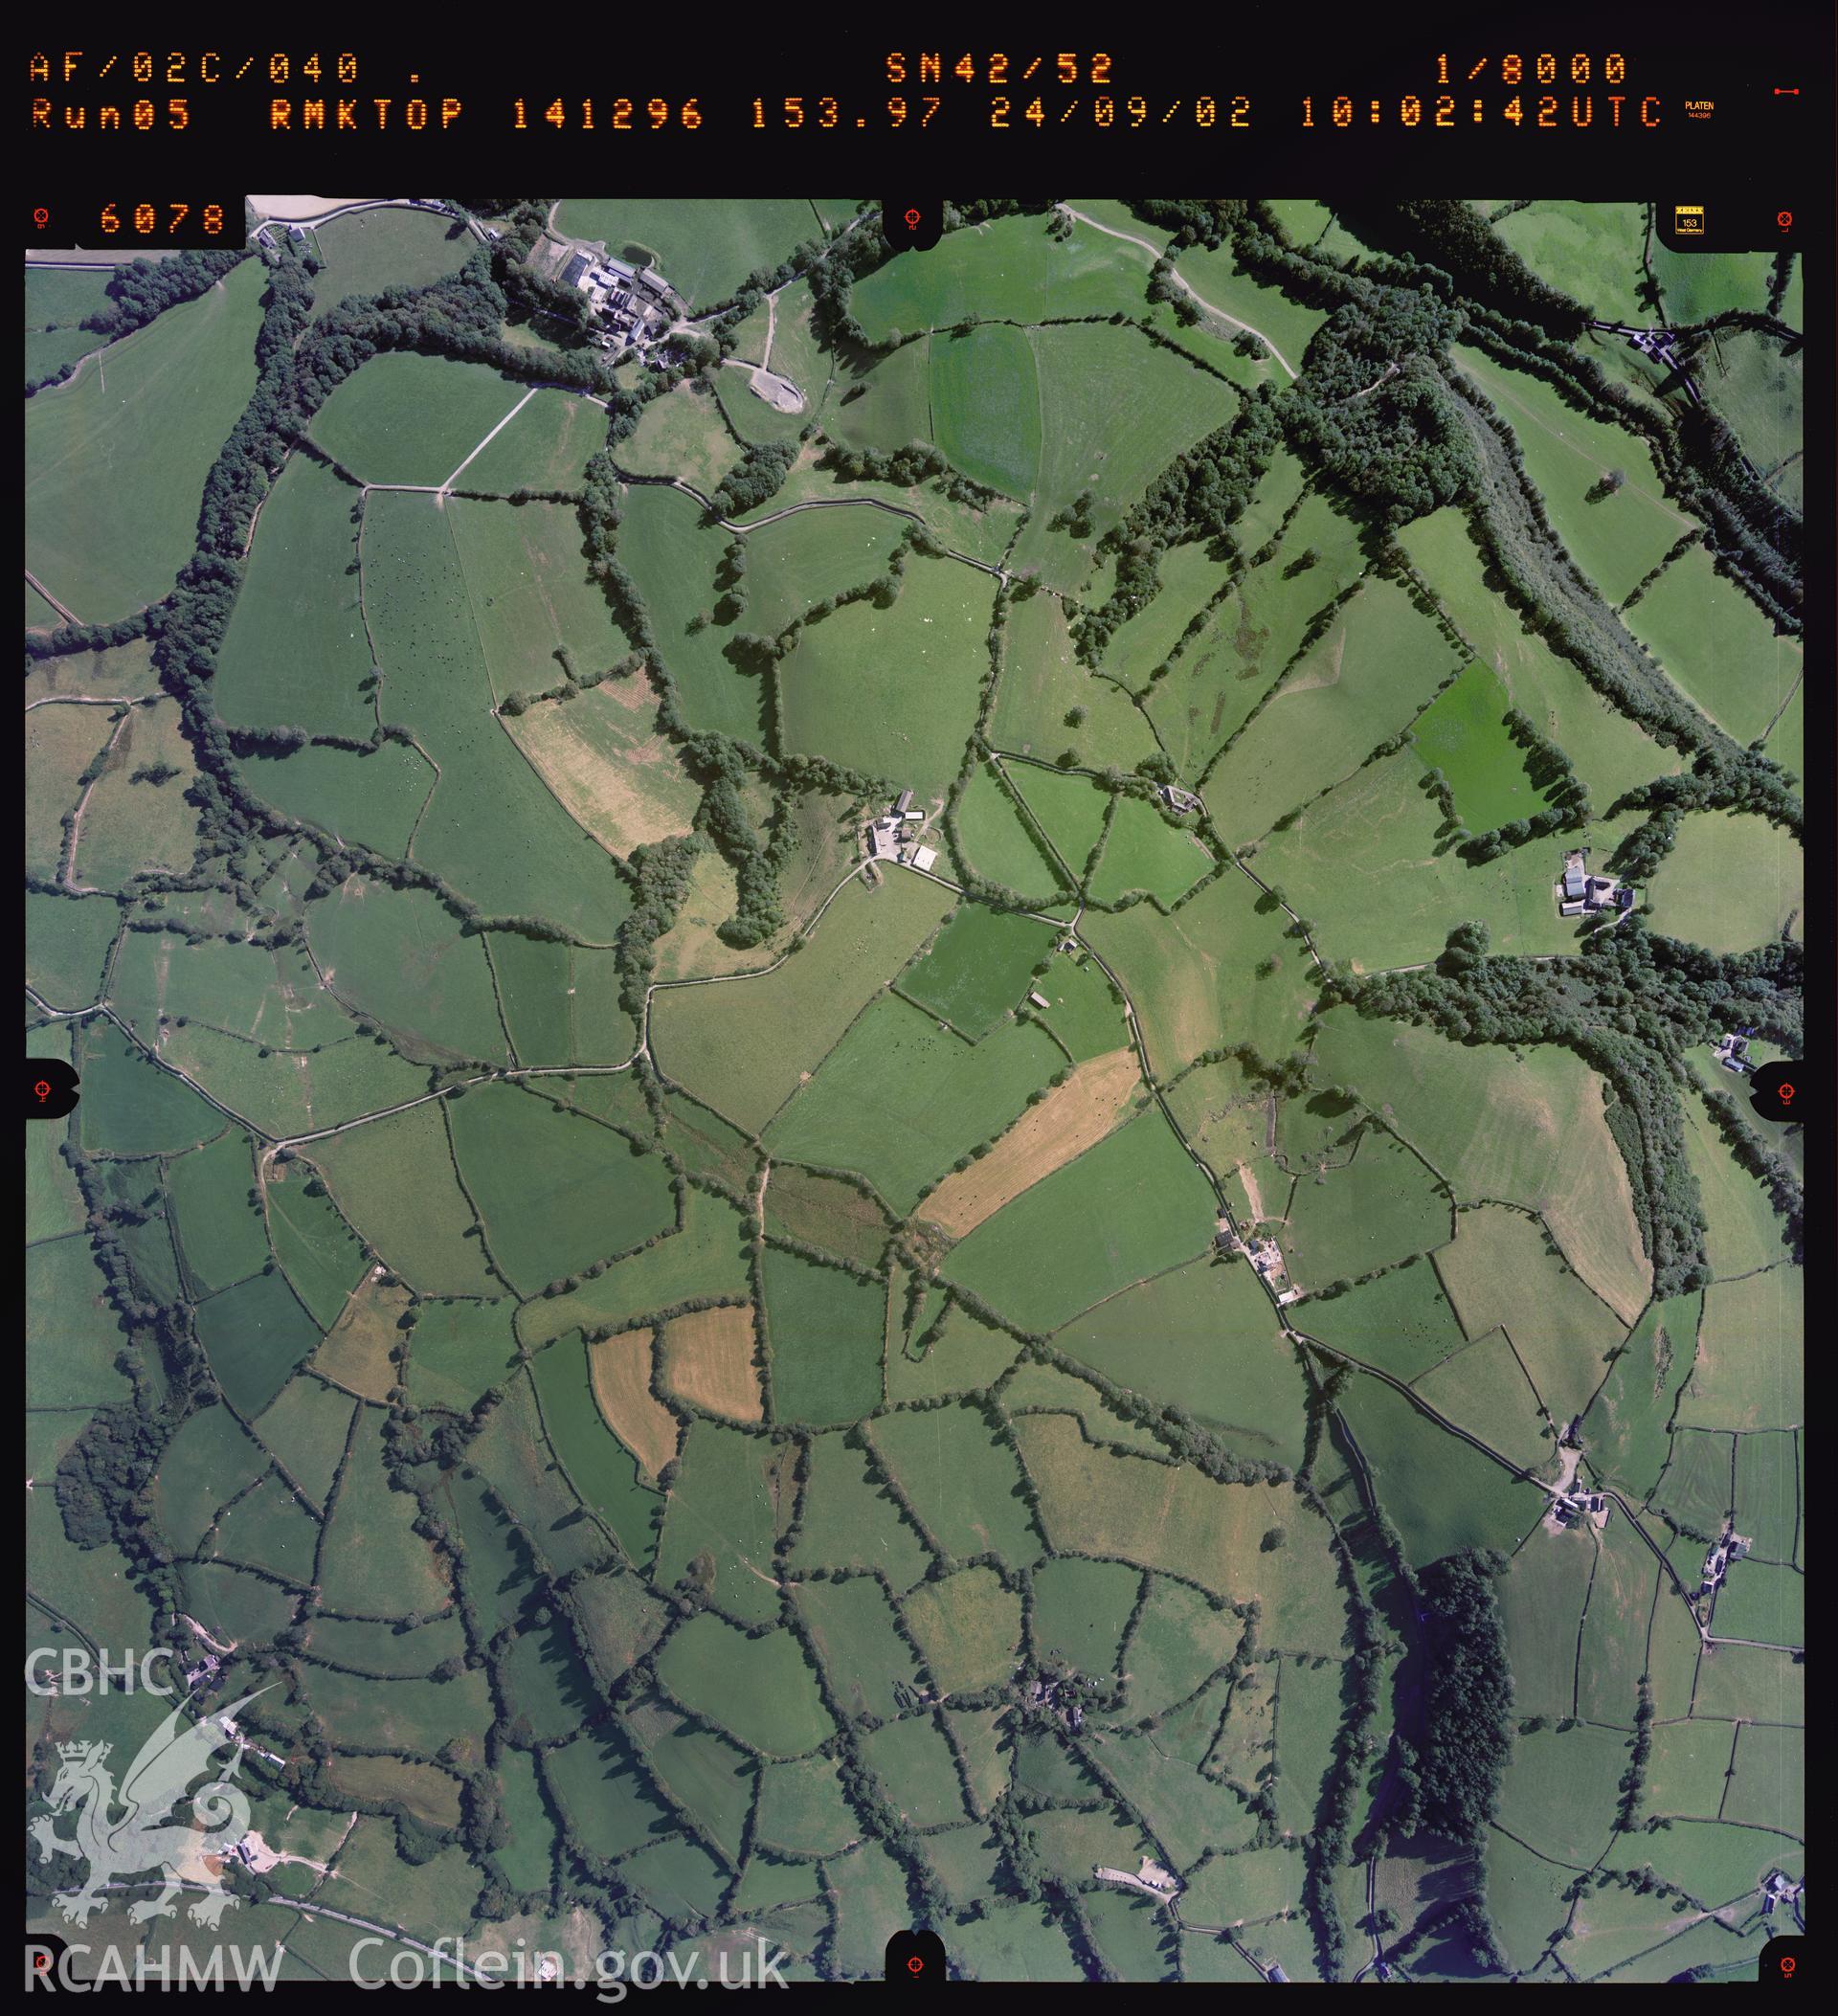 Digital copy of an Ordnance Survey aerial view of Meidrim dated 2002.